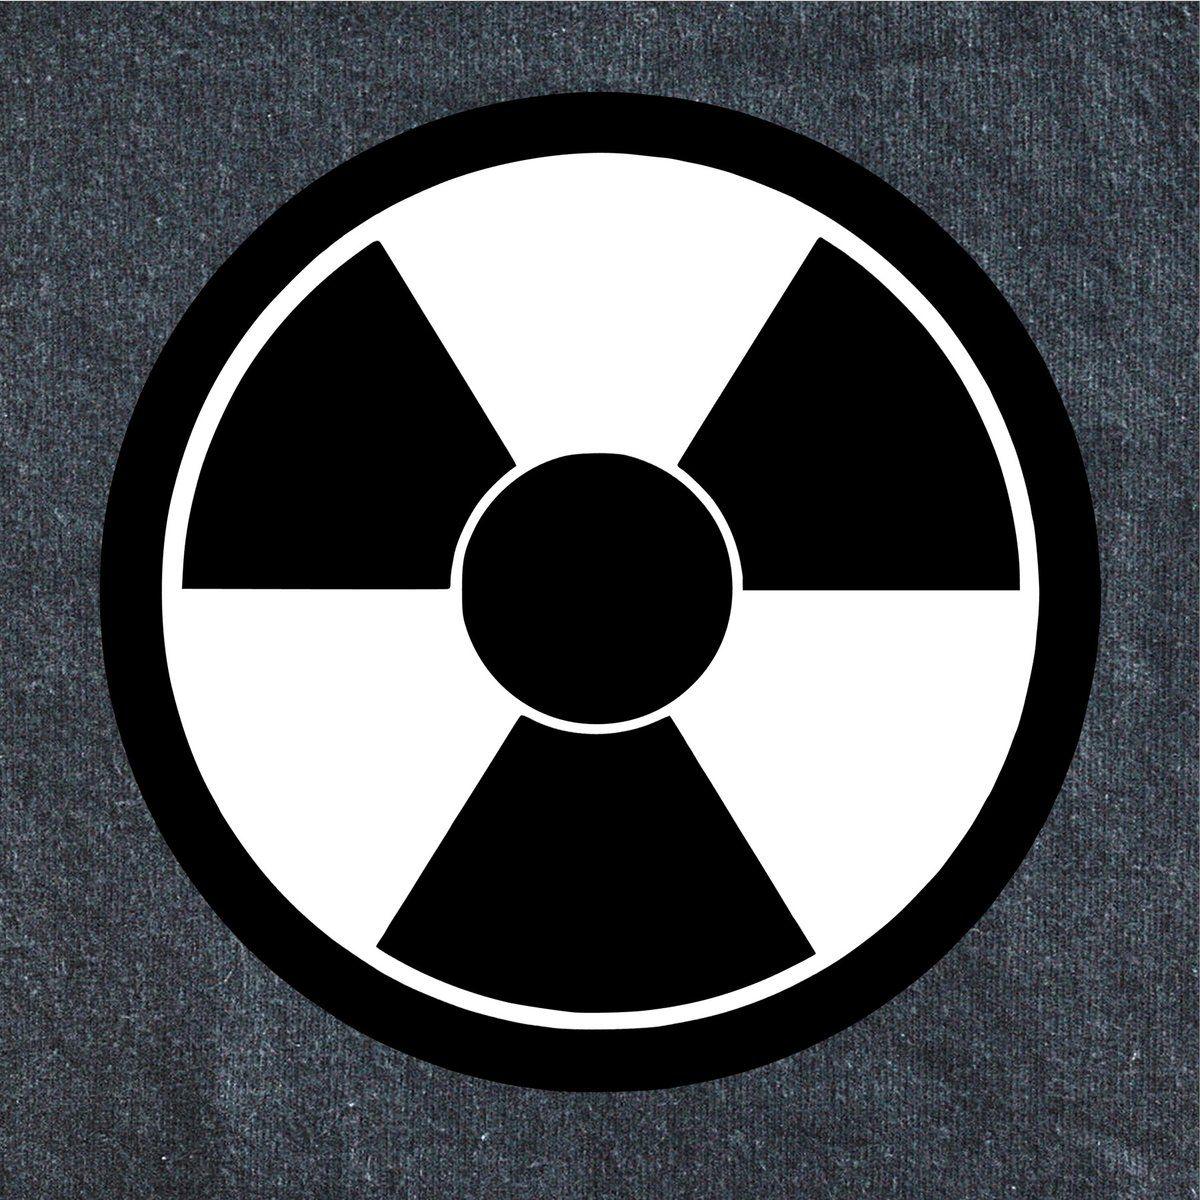 hulk radiation symbol black and white